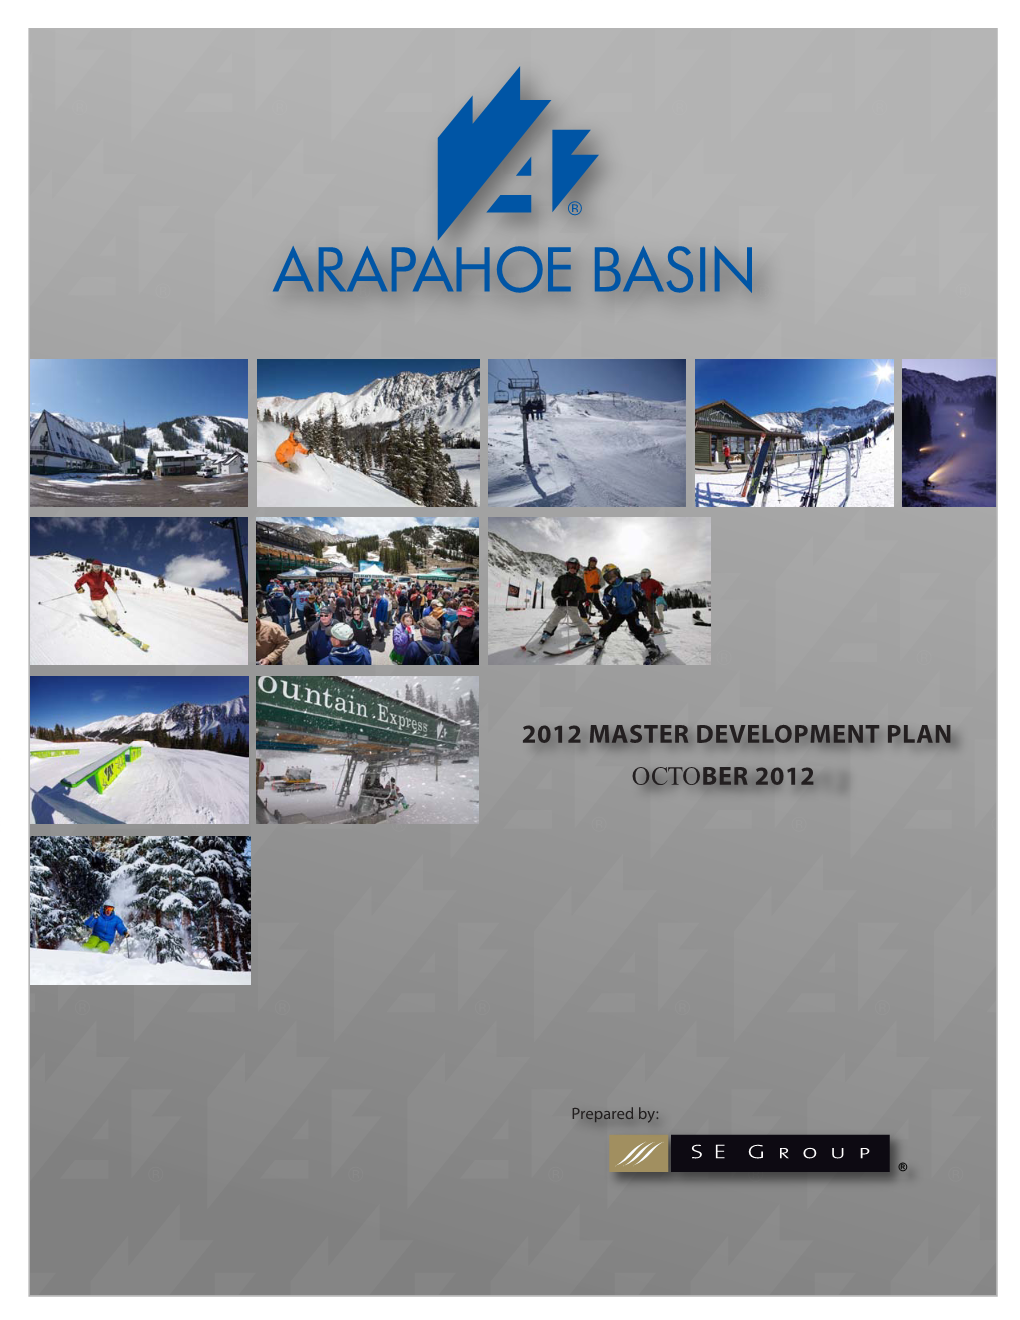 Arapahoe Basin 2012 Master Development Plan